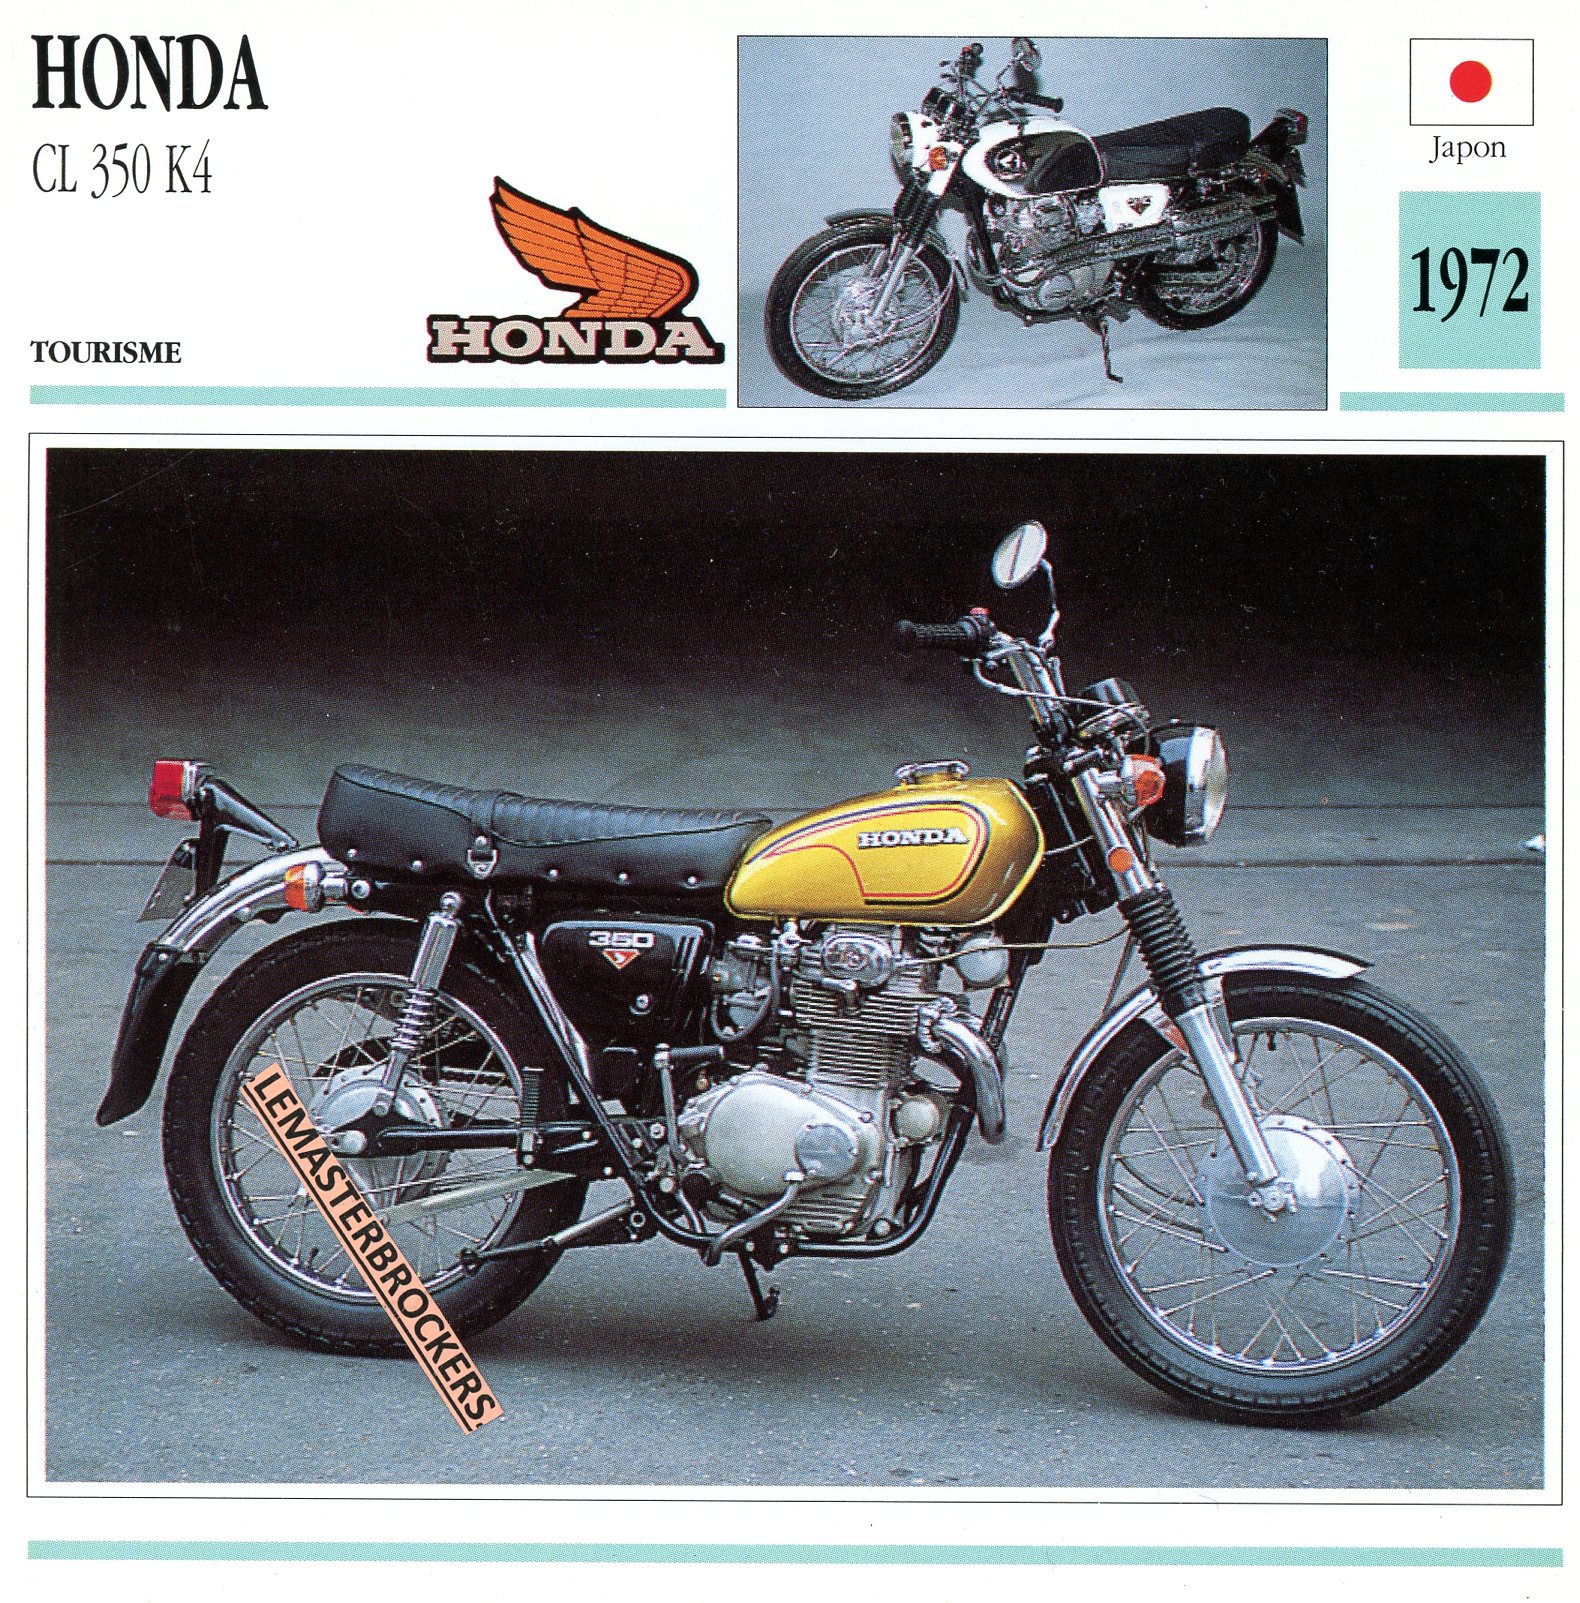 FICHE-MOTO-HONDA-CL350-K4-1972-LEMASTERBROCKERS-CARS-MOTORCYCLE